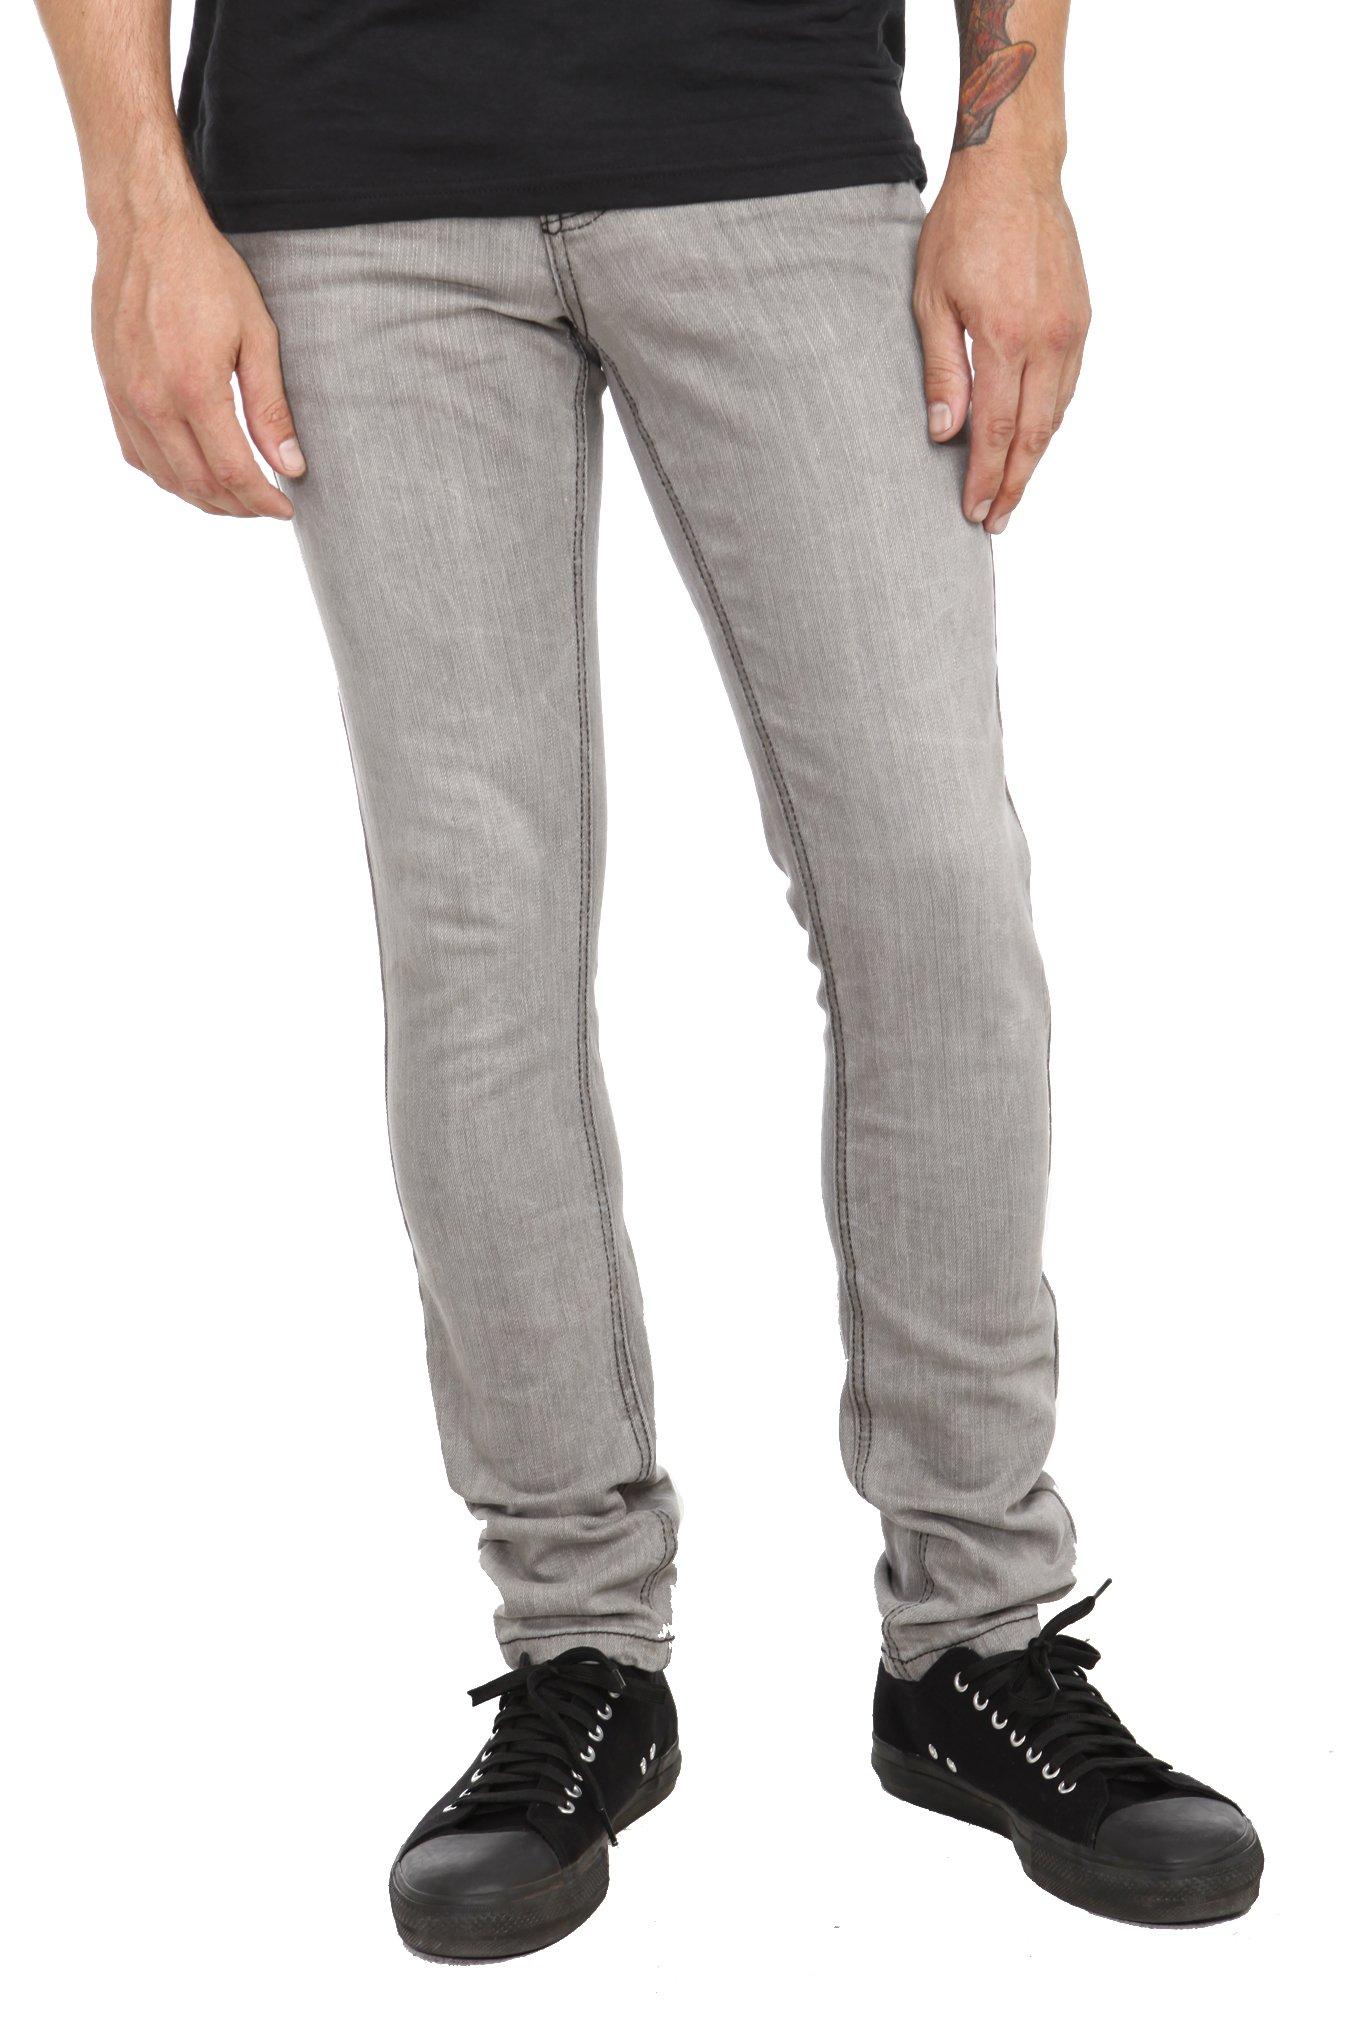 RUDE Grey Vintage Skinny Jeans, LIGHT GRAY, hi-res